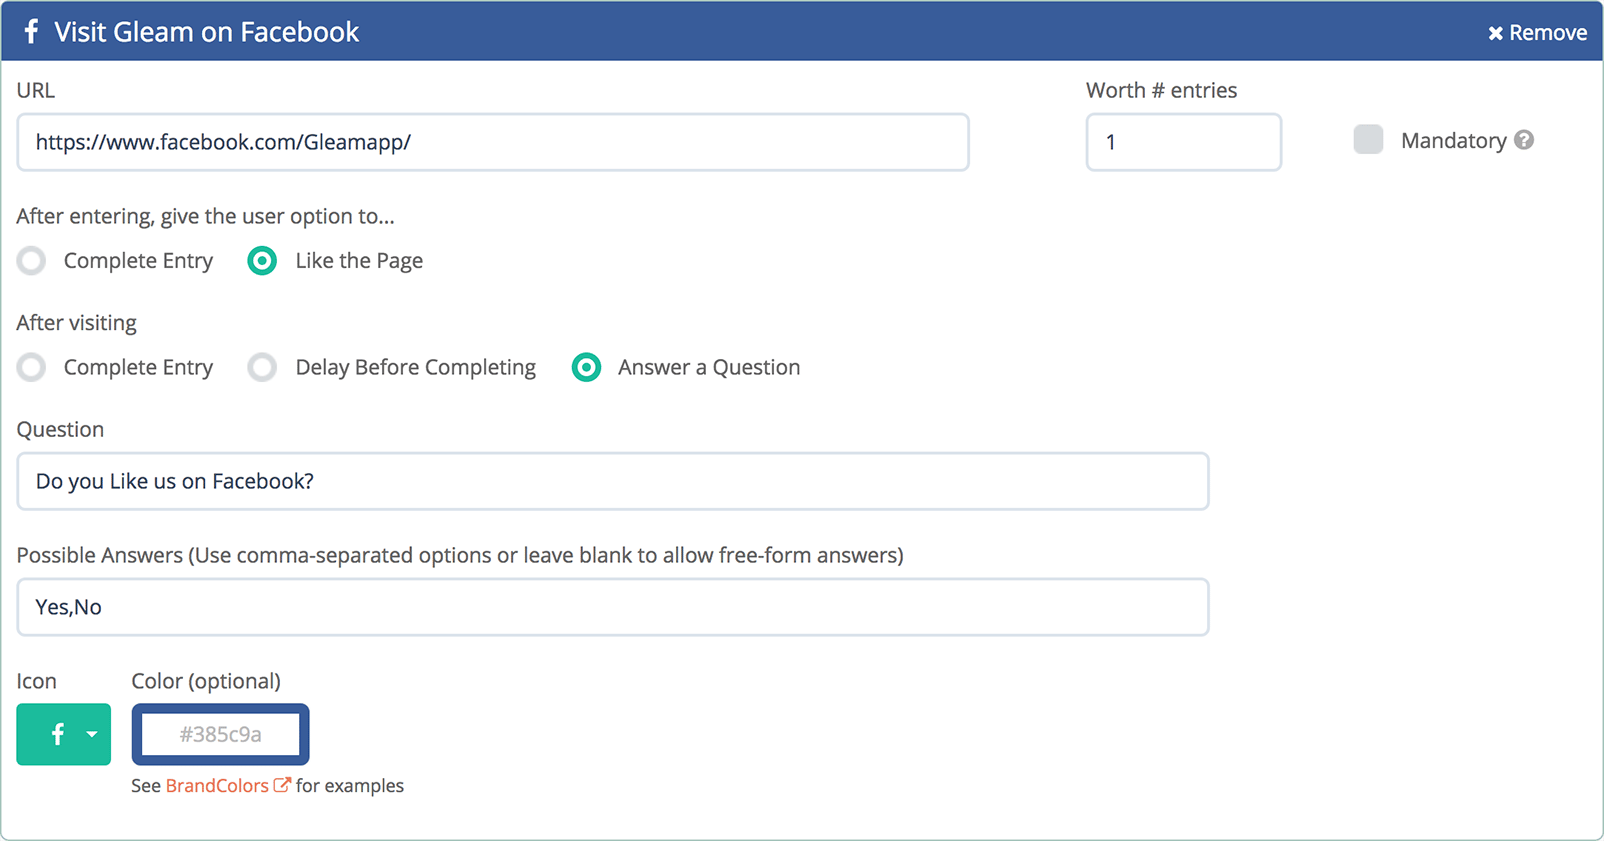 Gleam interface showing visit Facebook tab